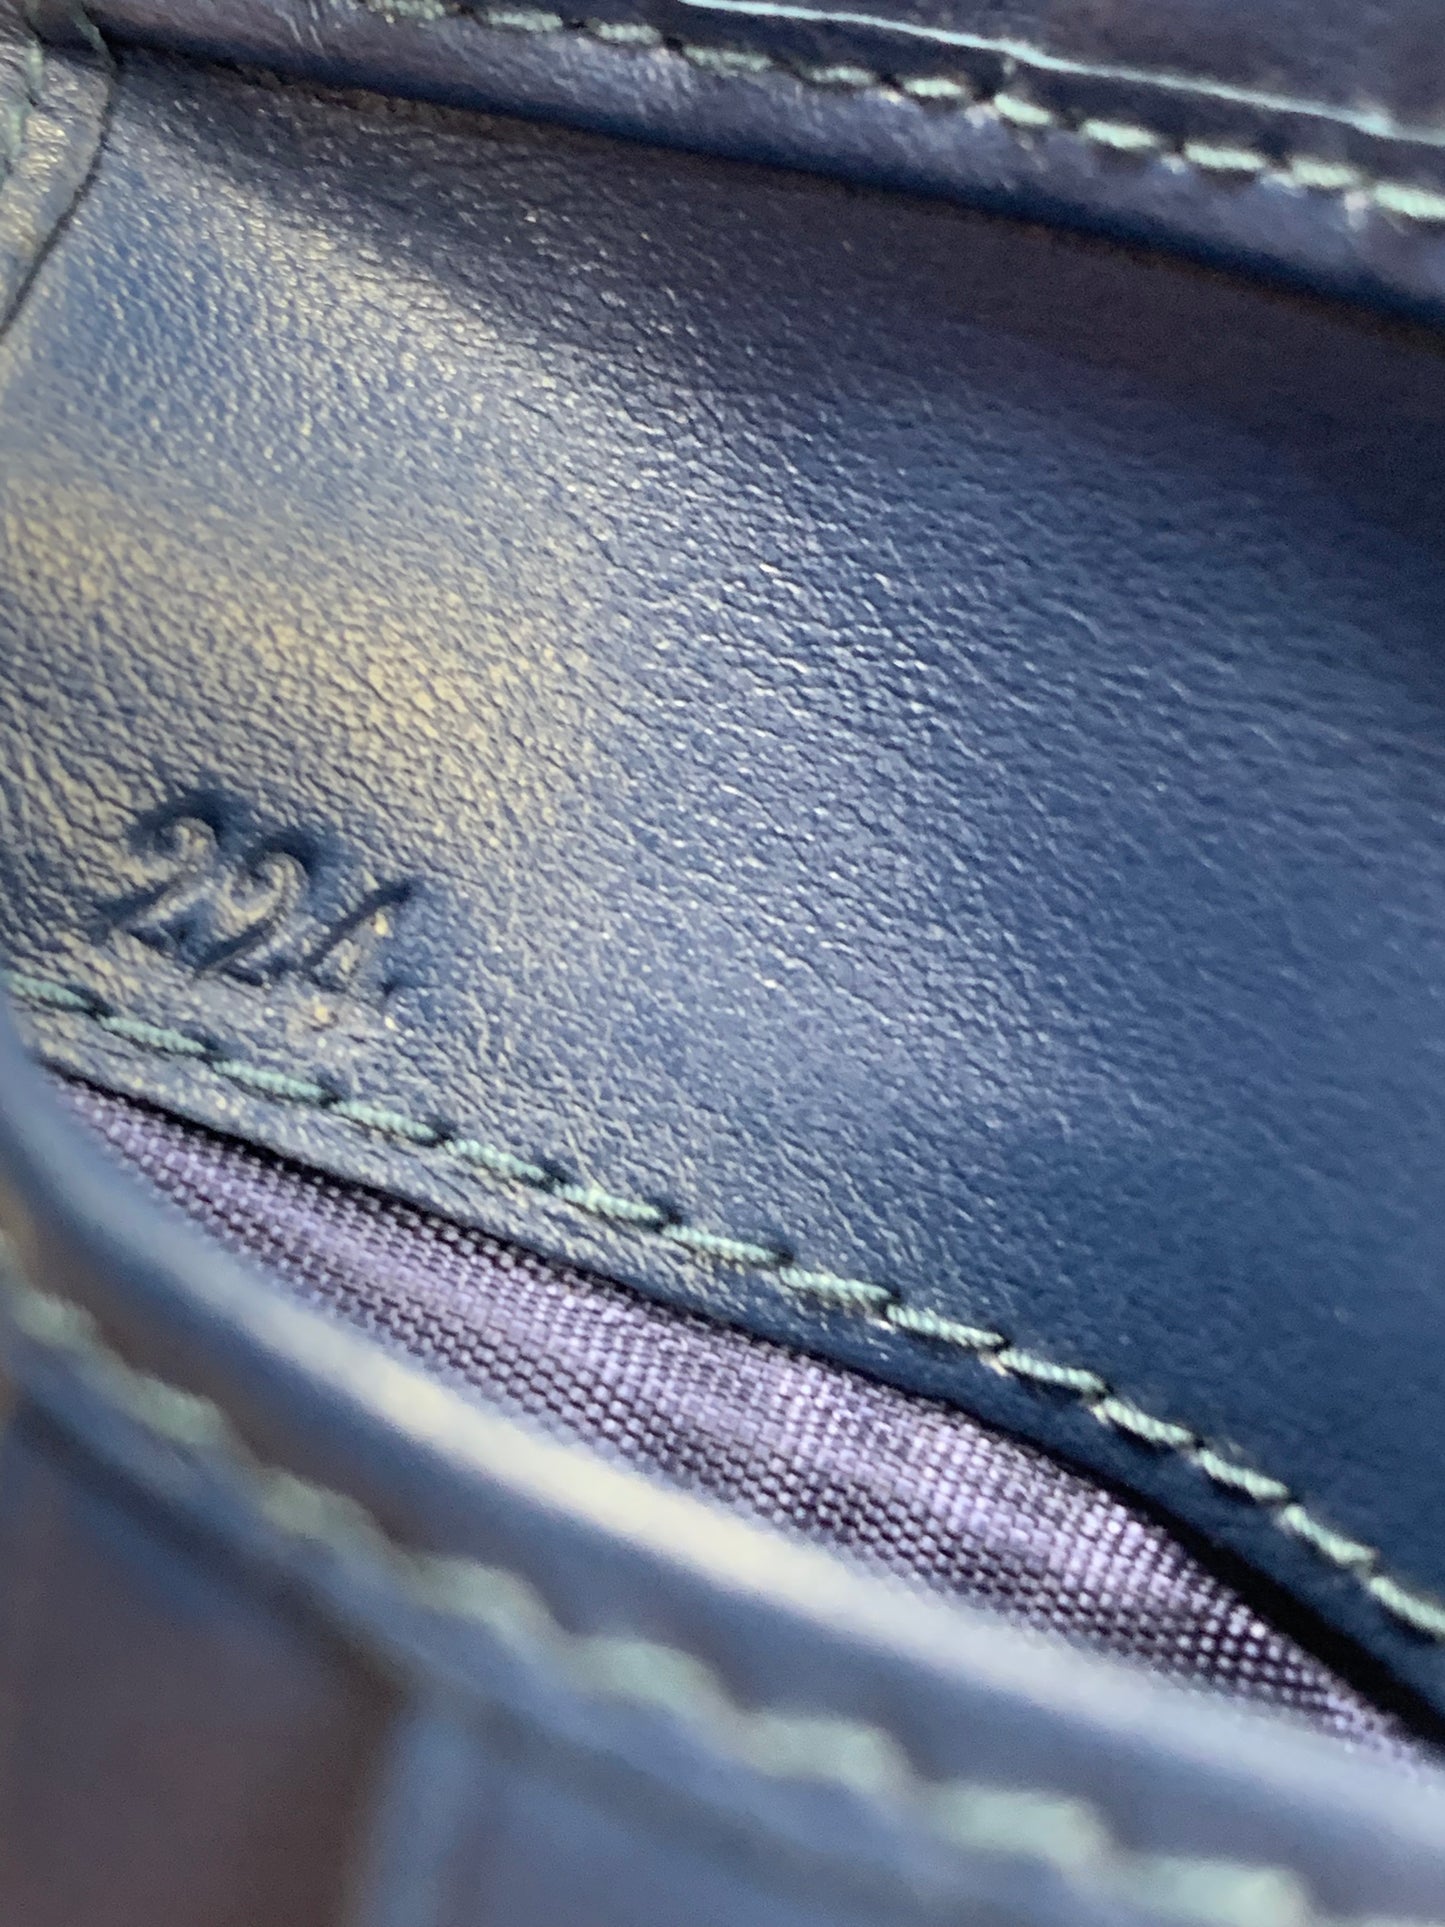 Prada Navy Blue Bifold Calfskin Leather Wallet